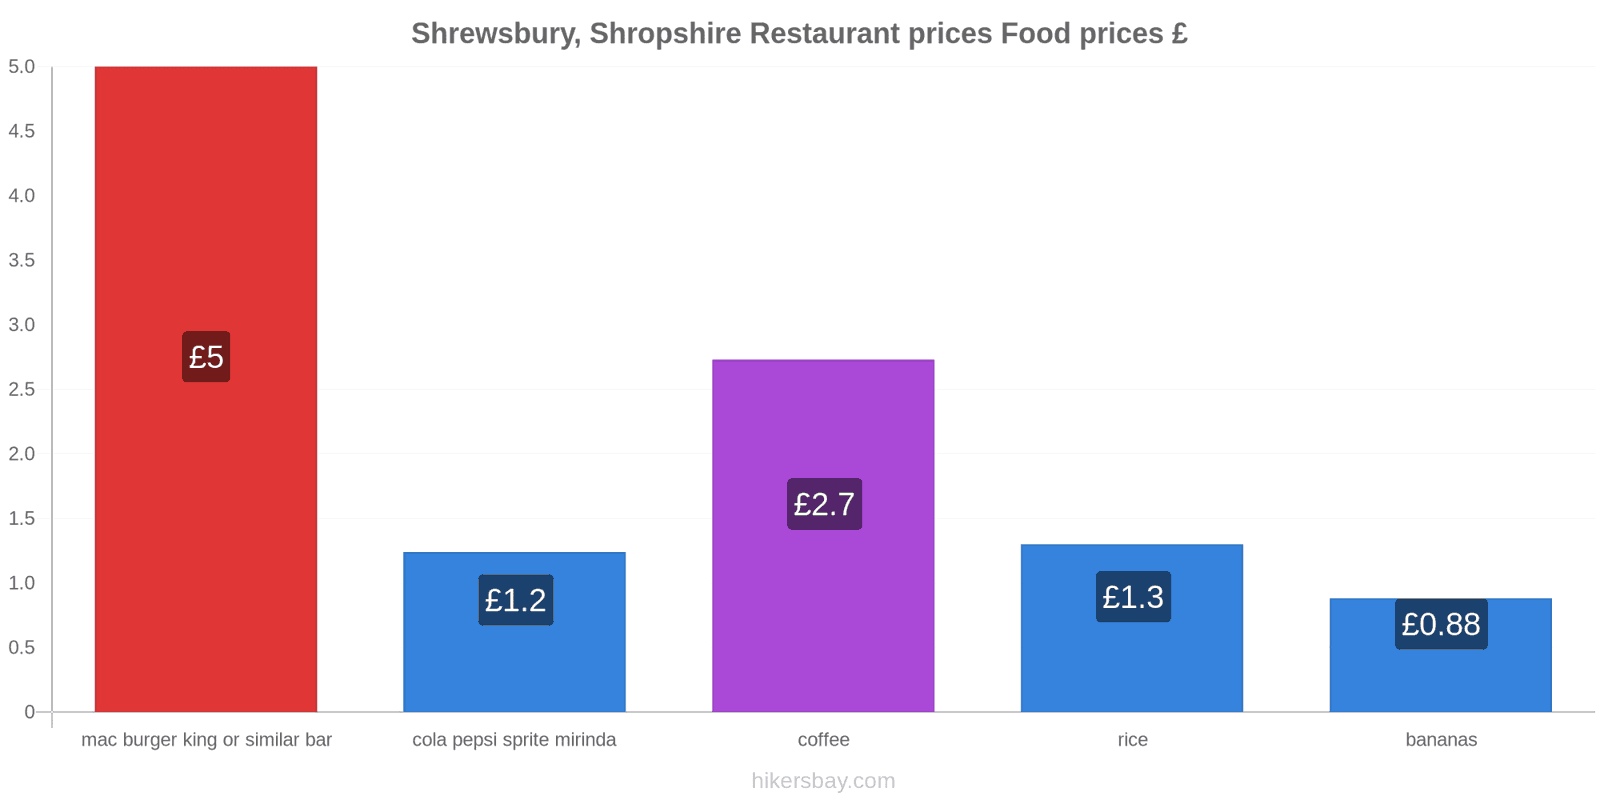 Shrewsbury, Shropshire price changes hikersbay.com